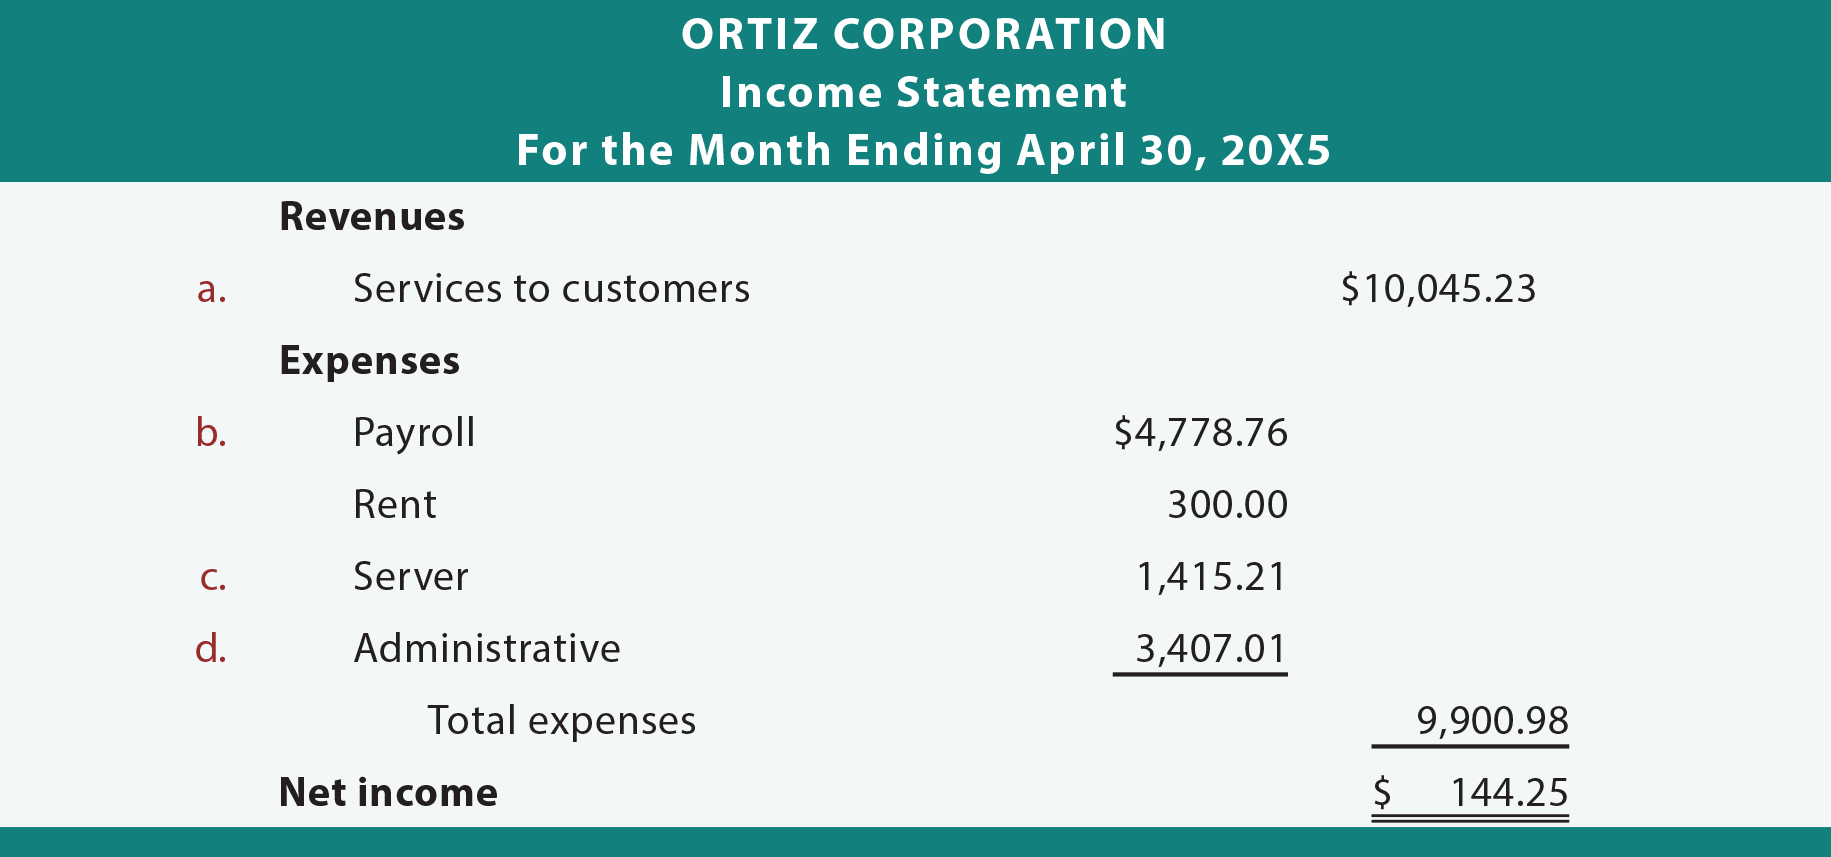 Ortiz Corporation income statement